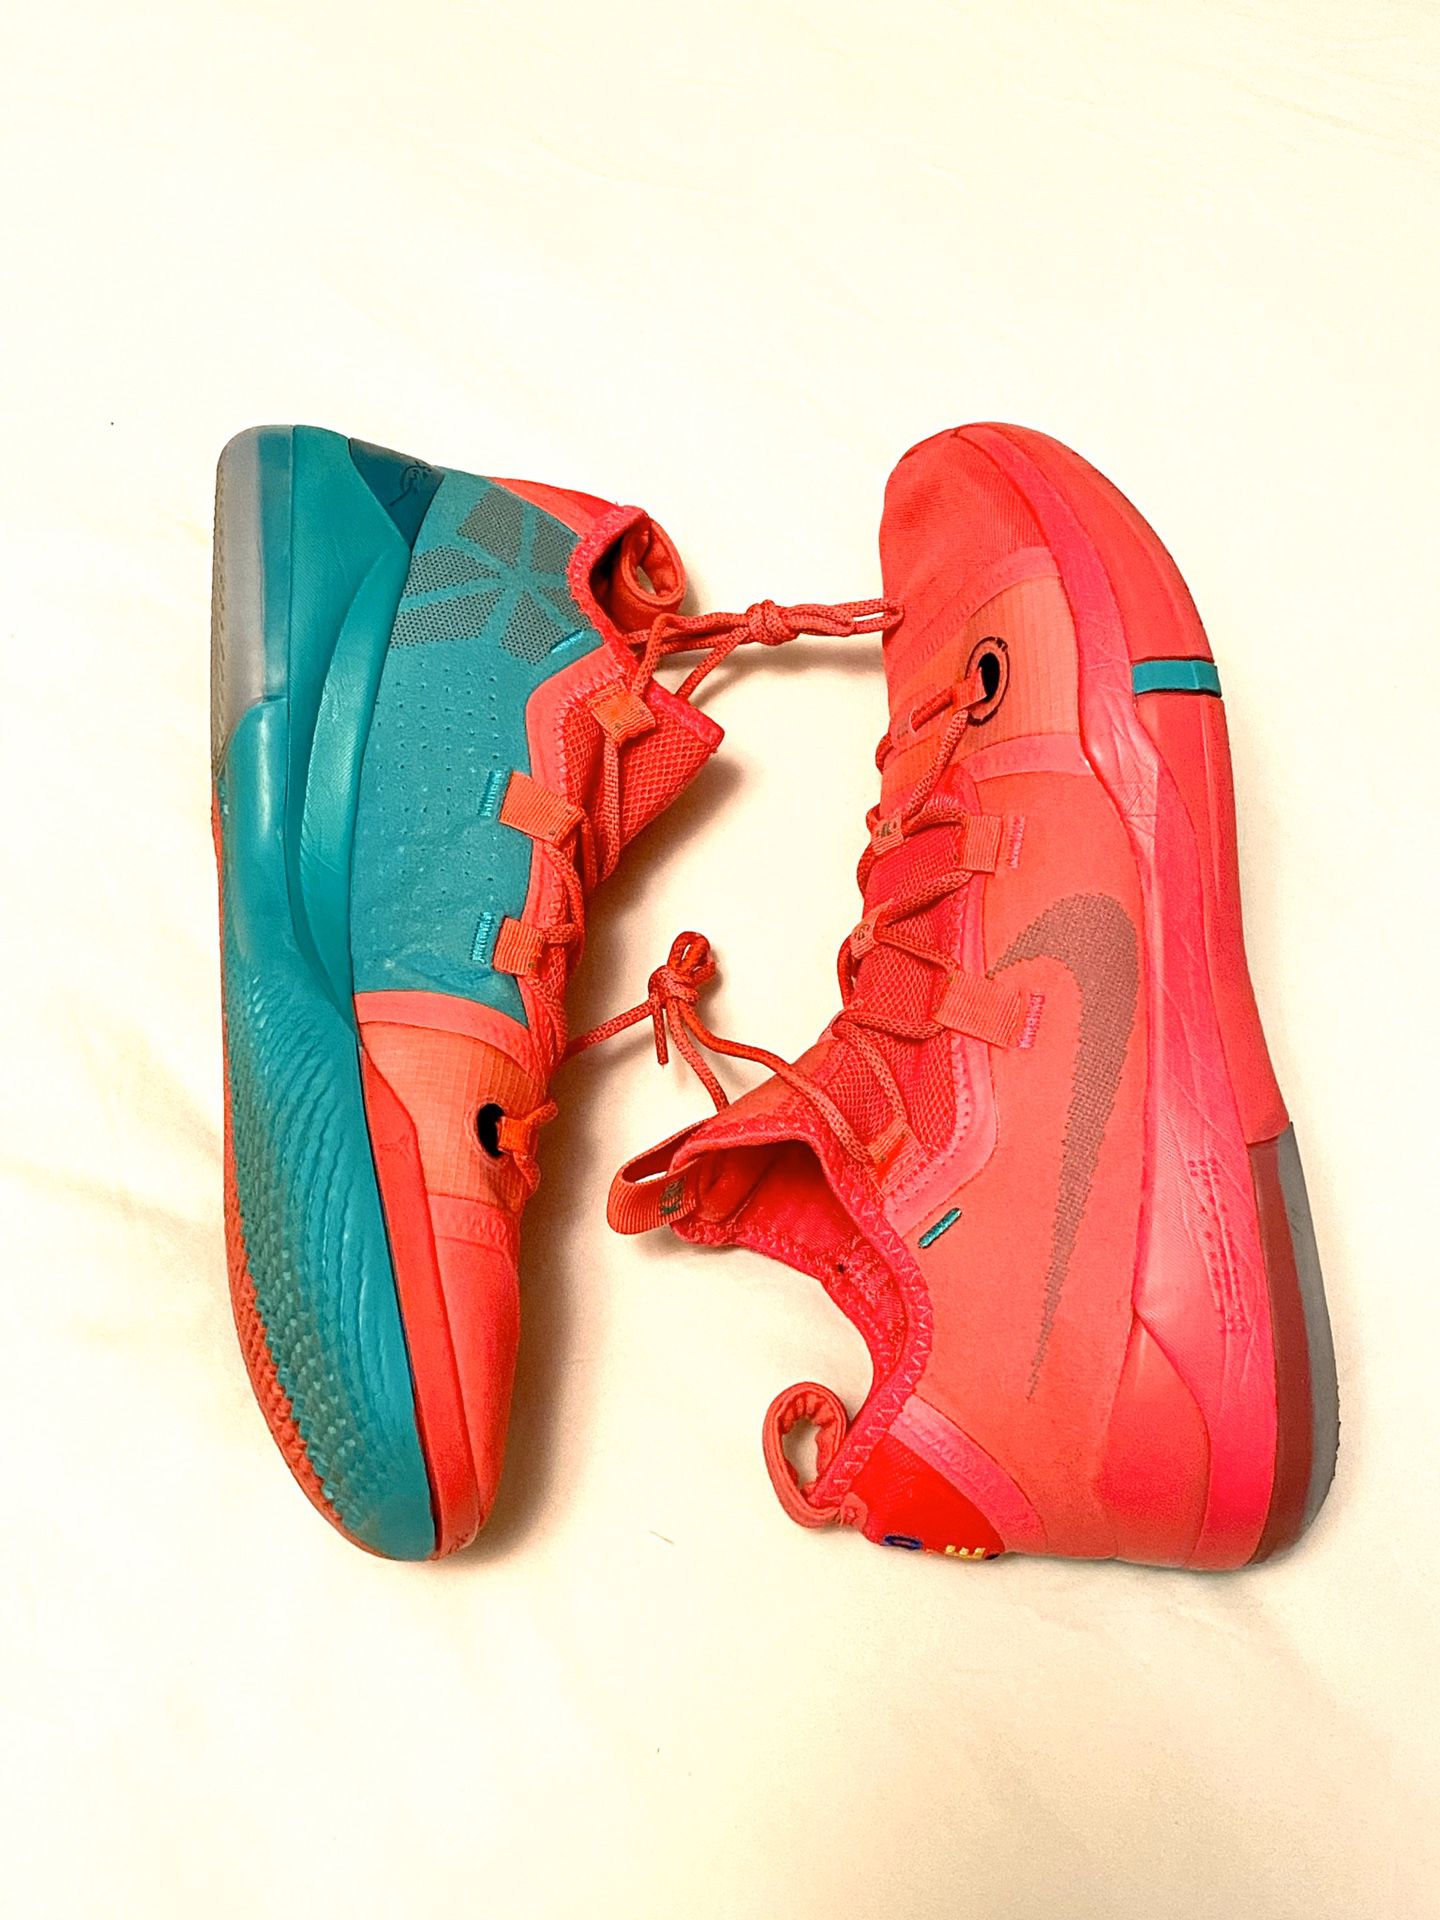 Nike Kobe AD Red Orbit